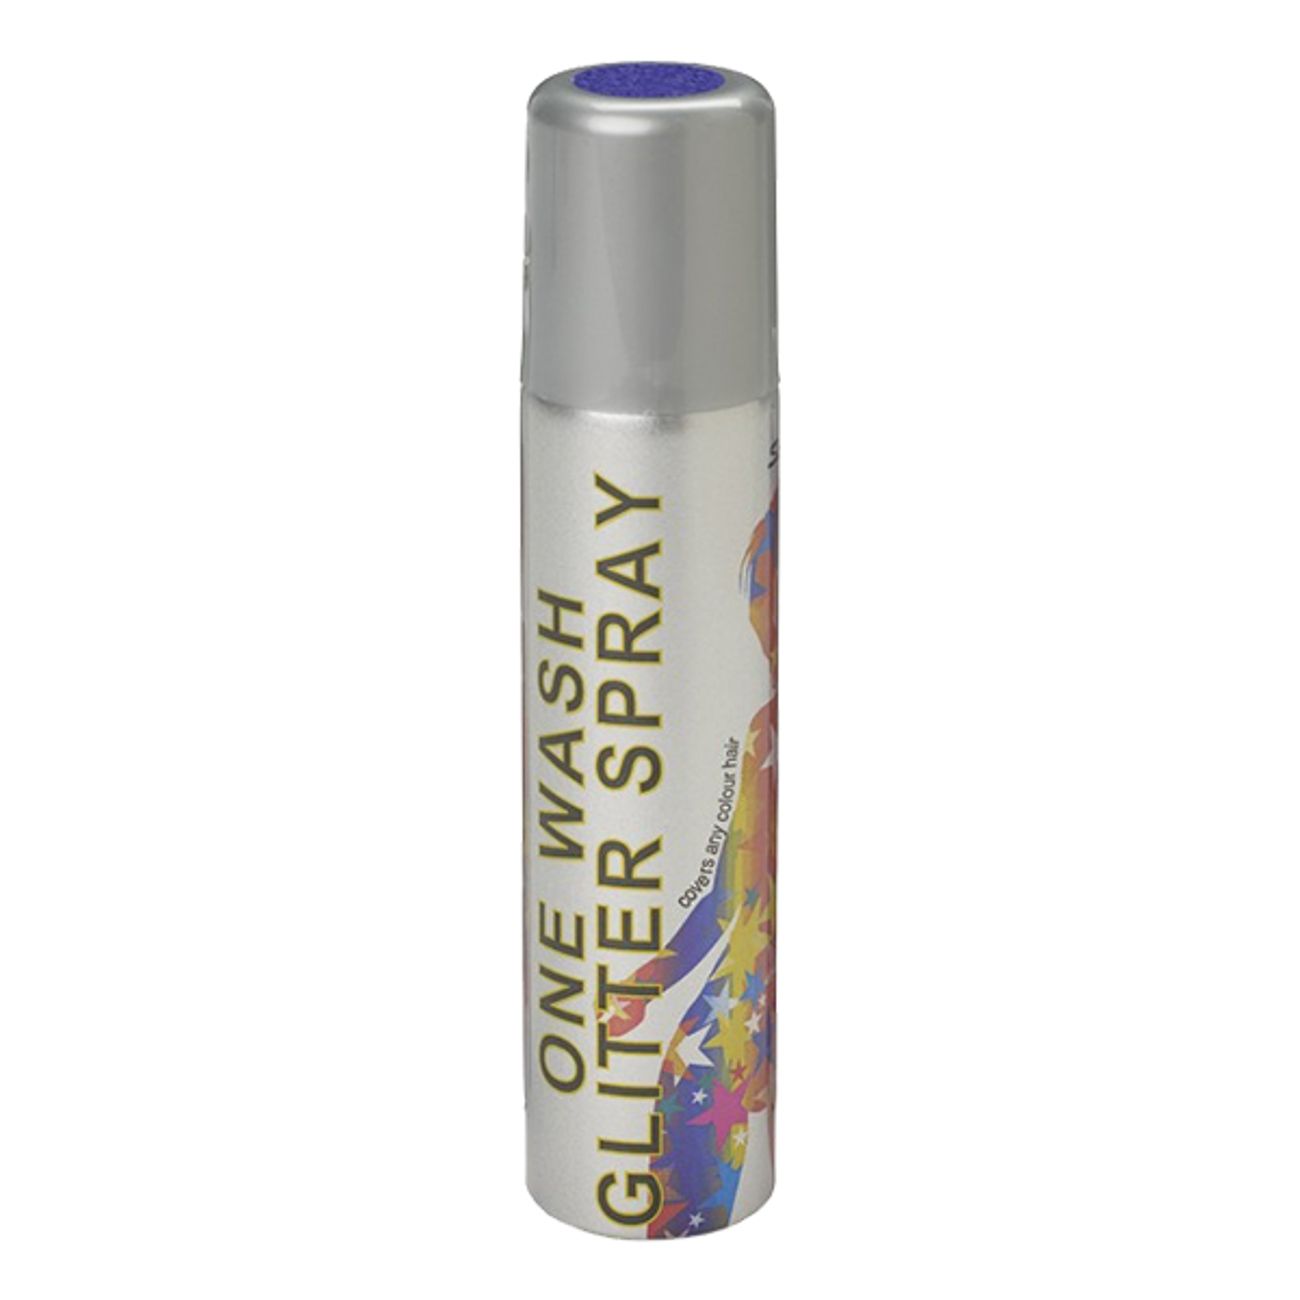 stargazer-glitterspray-5